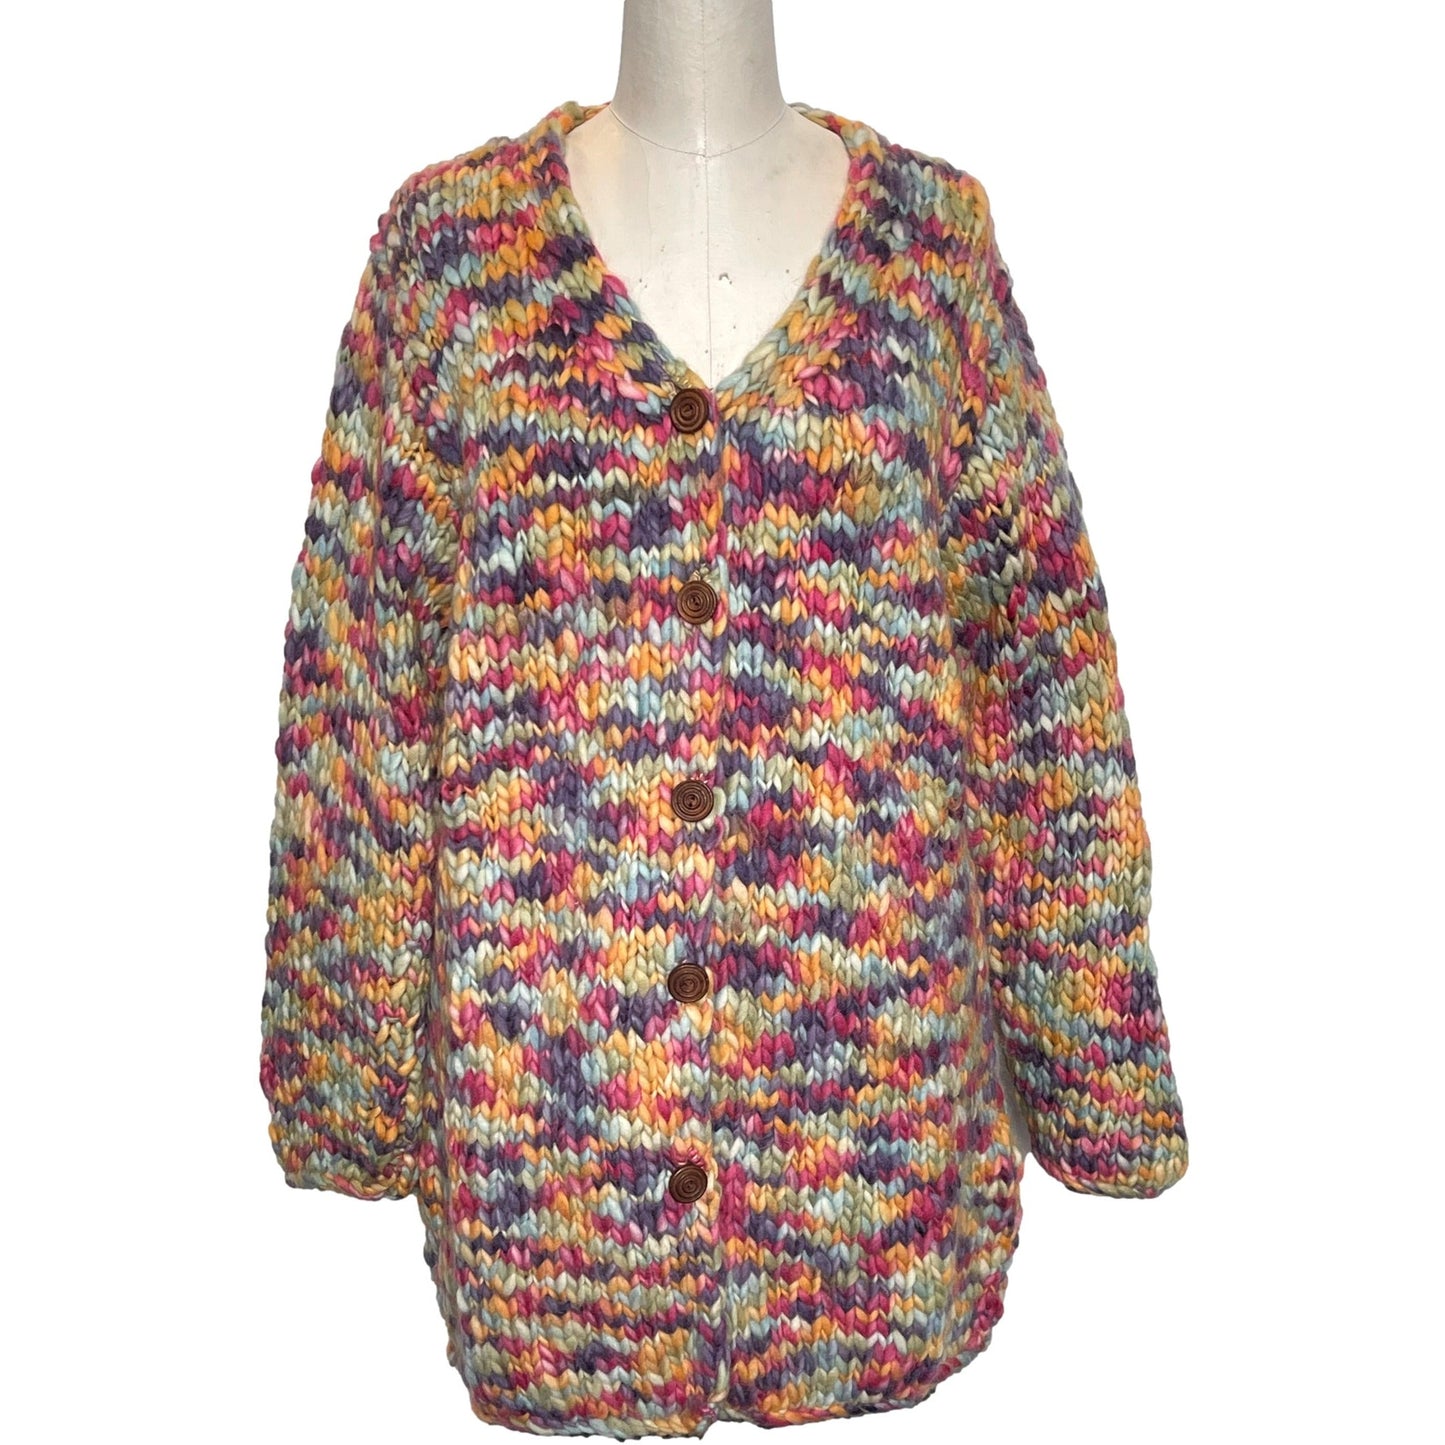 Adini Handmade Bulky Knit Cardigan Sweater